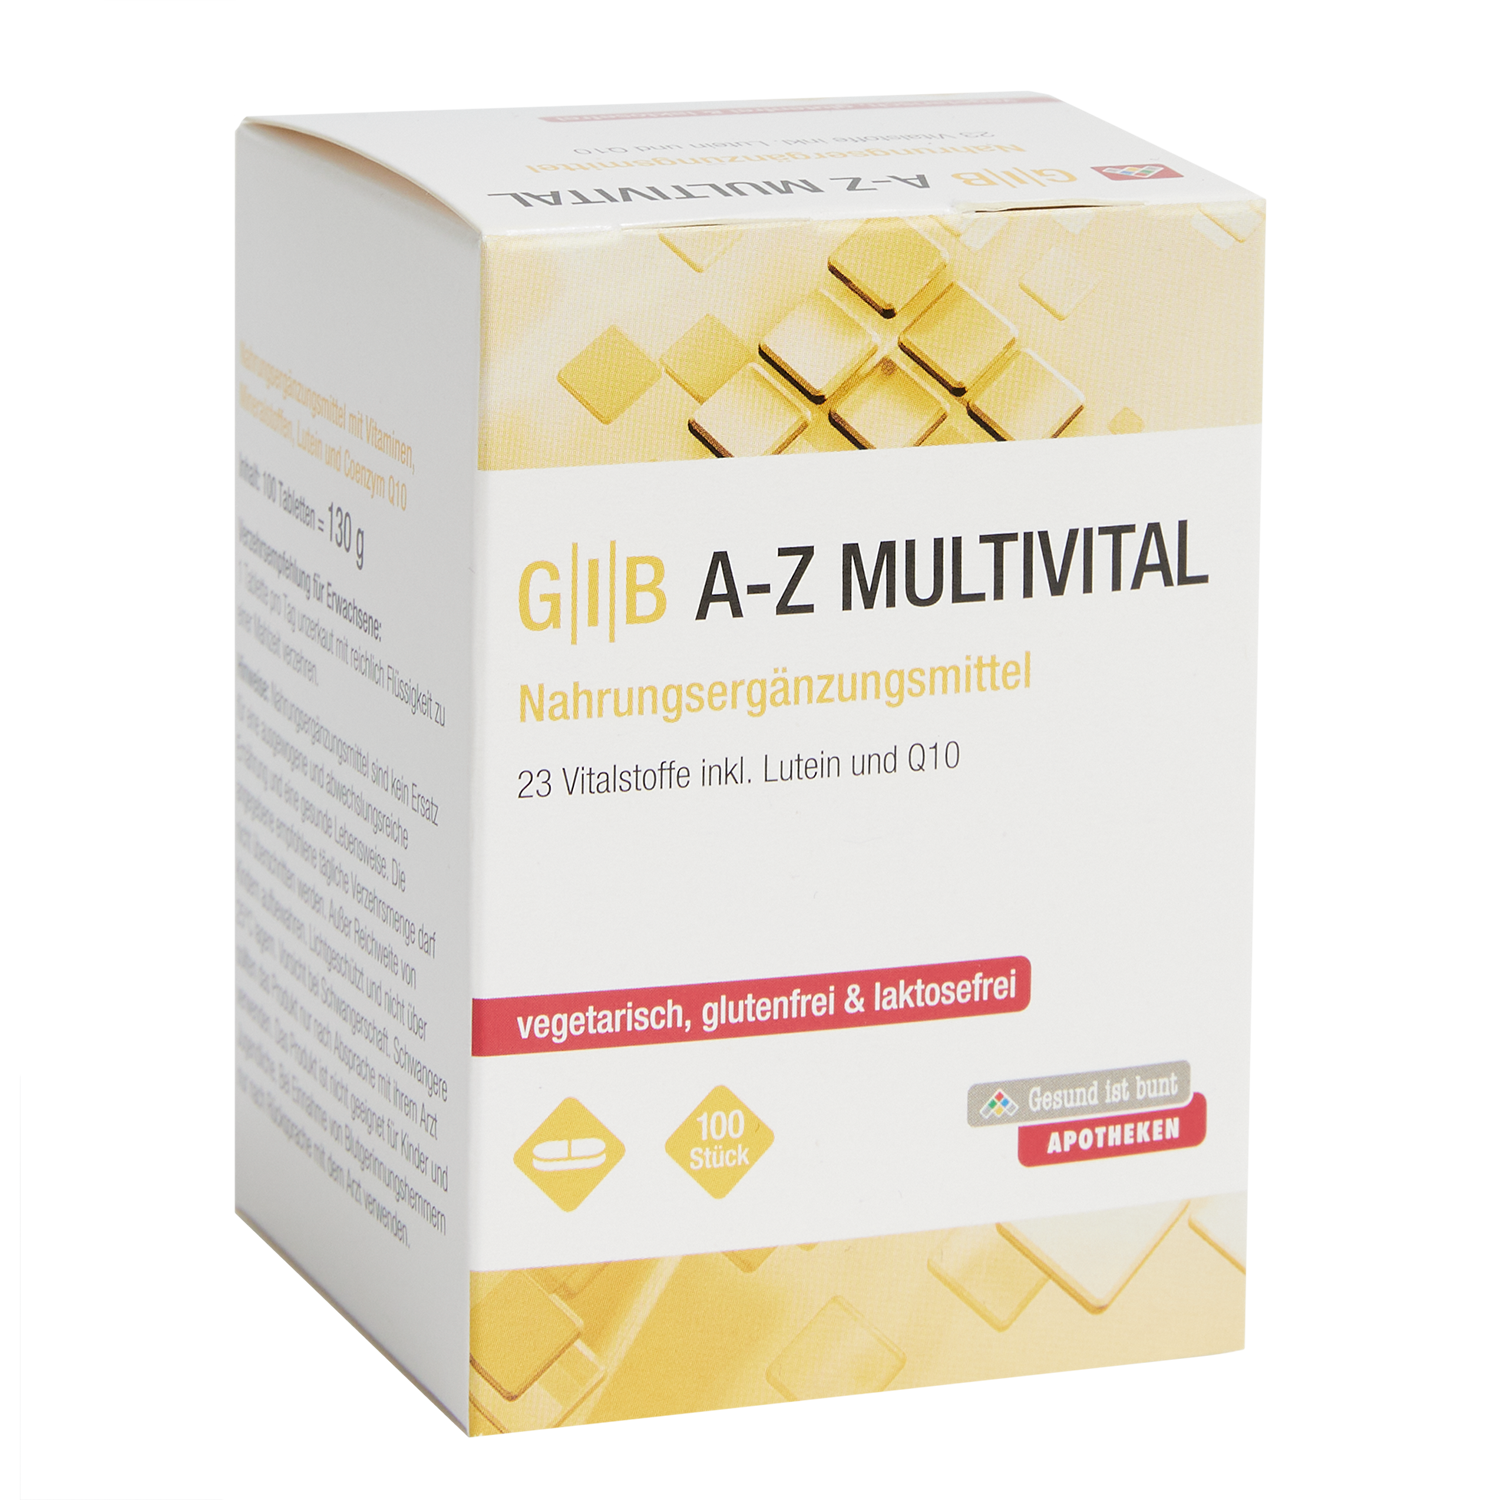 G|I|B A-Z Multivital